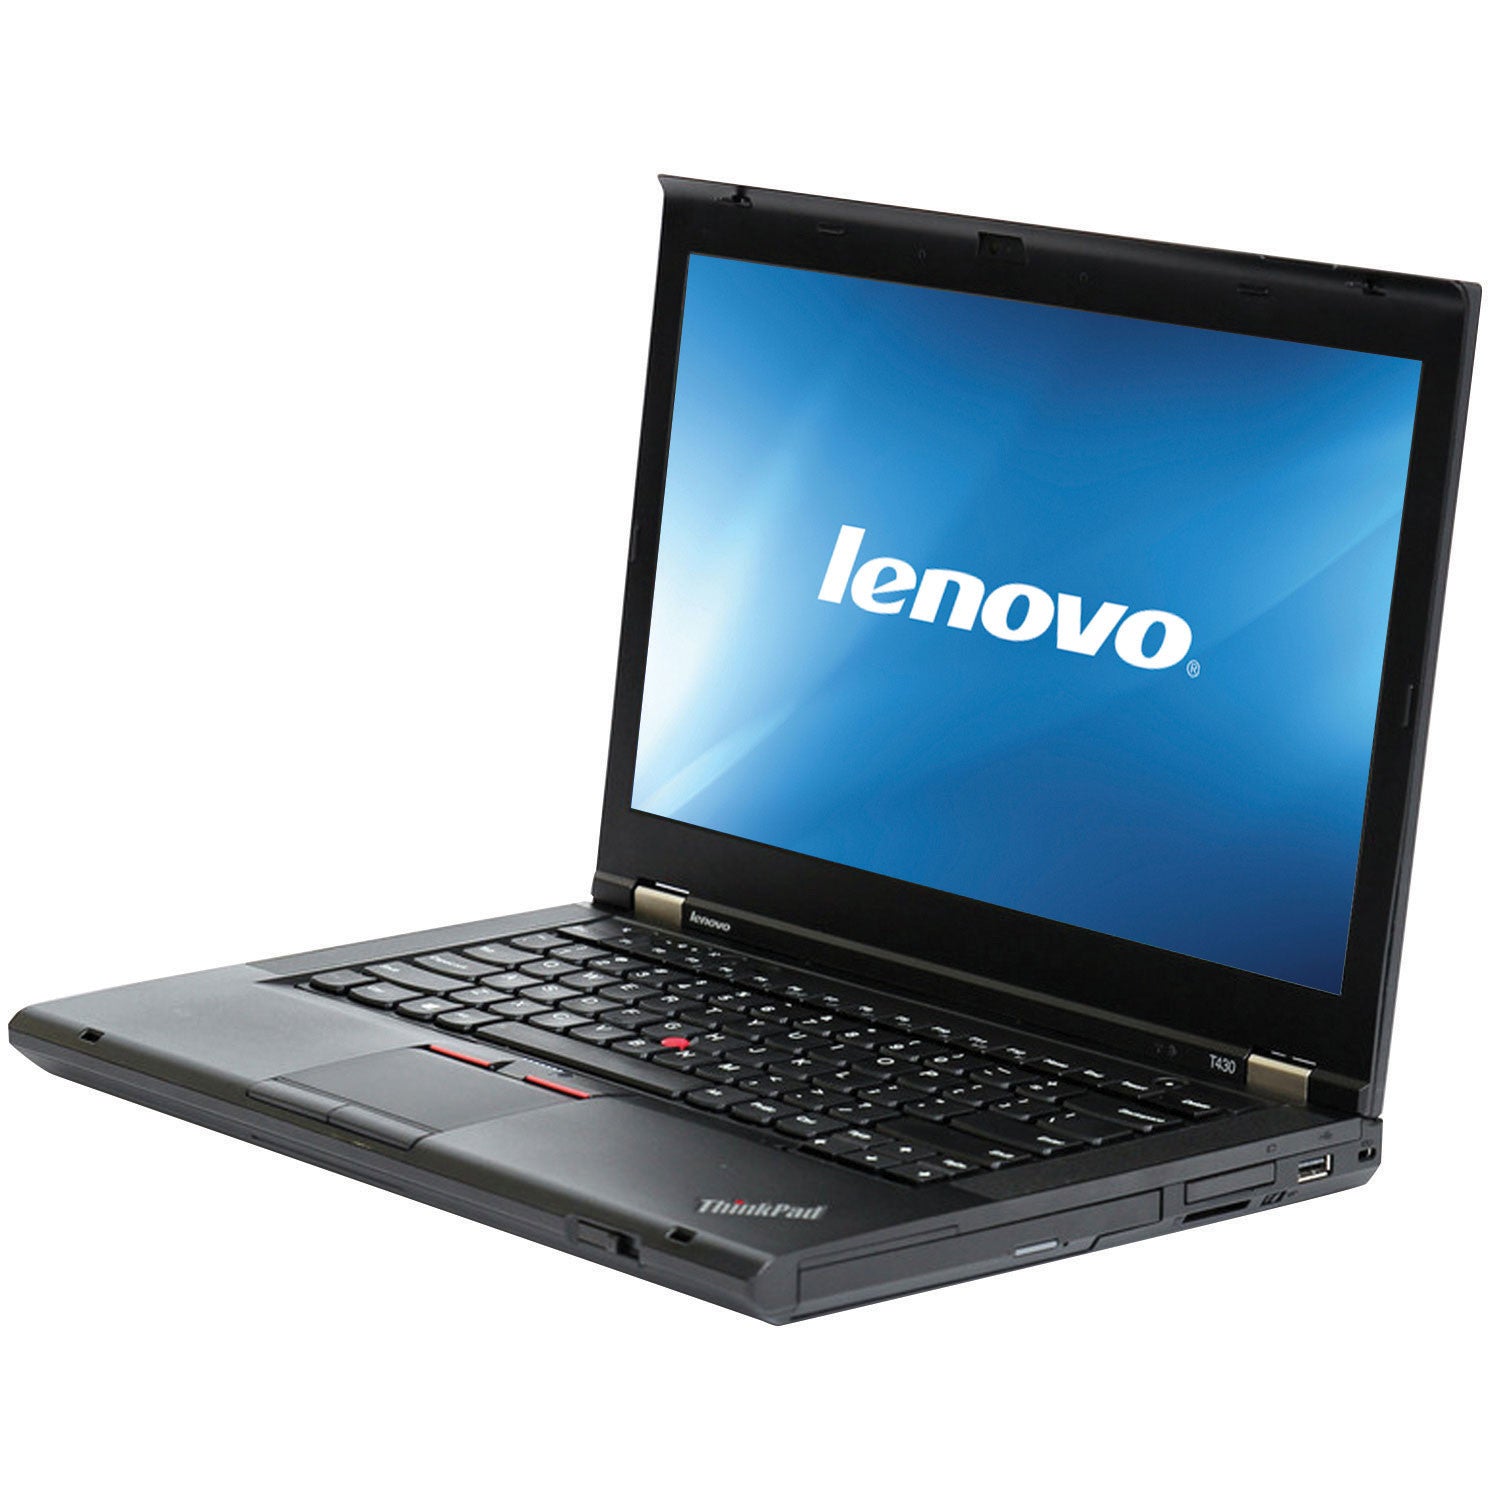 Lenovo ThinkPad T430 Refurbished Laptops Canada | Refurbish Canada